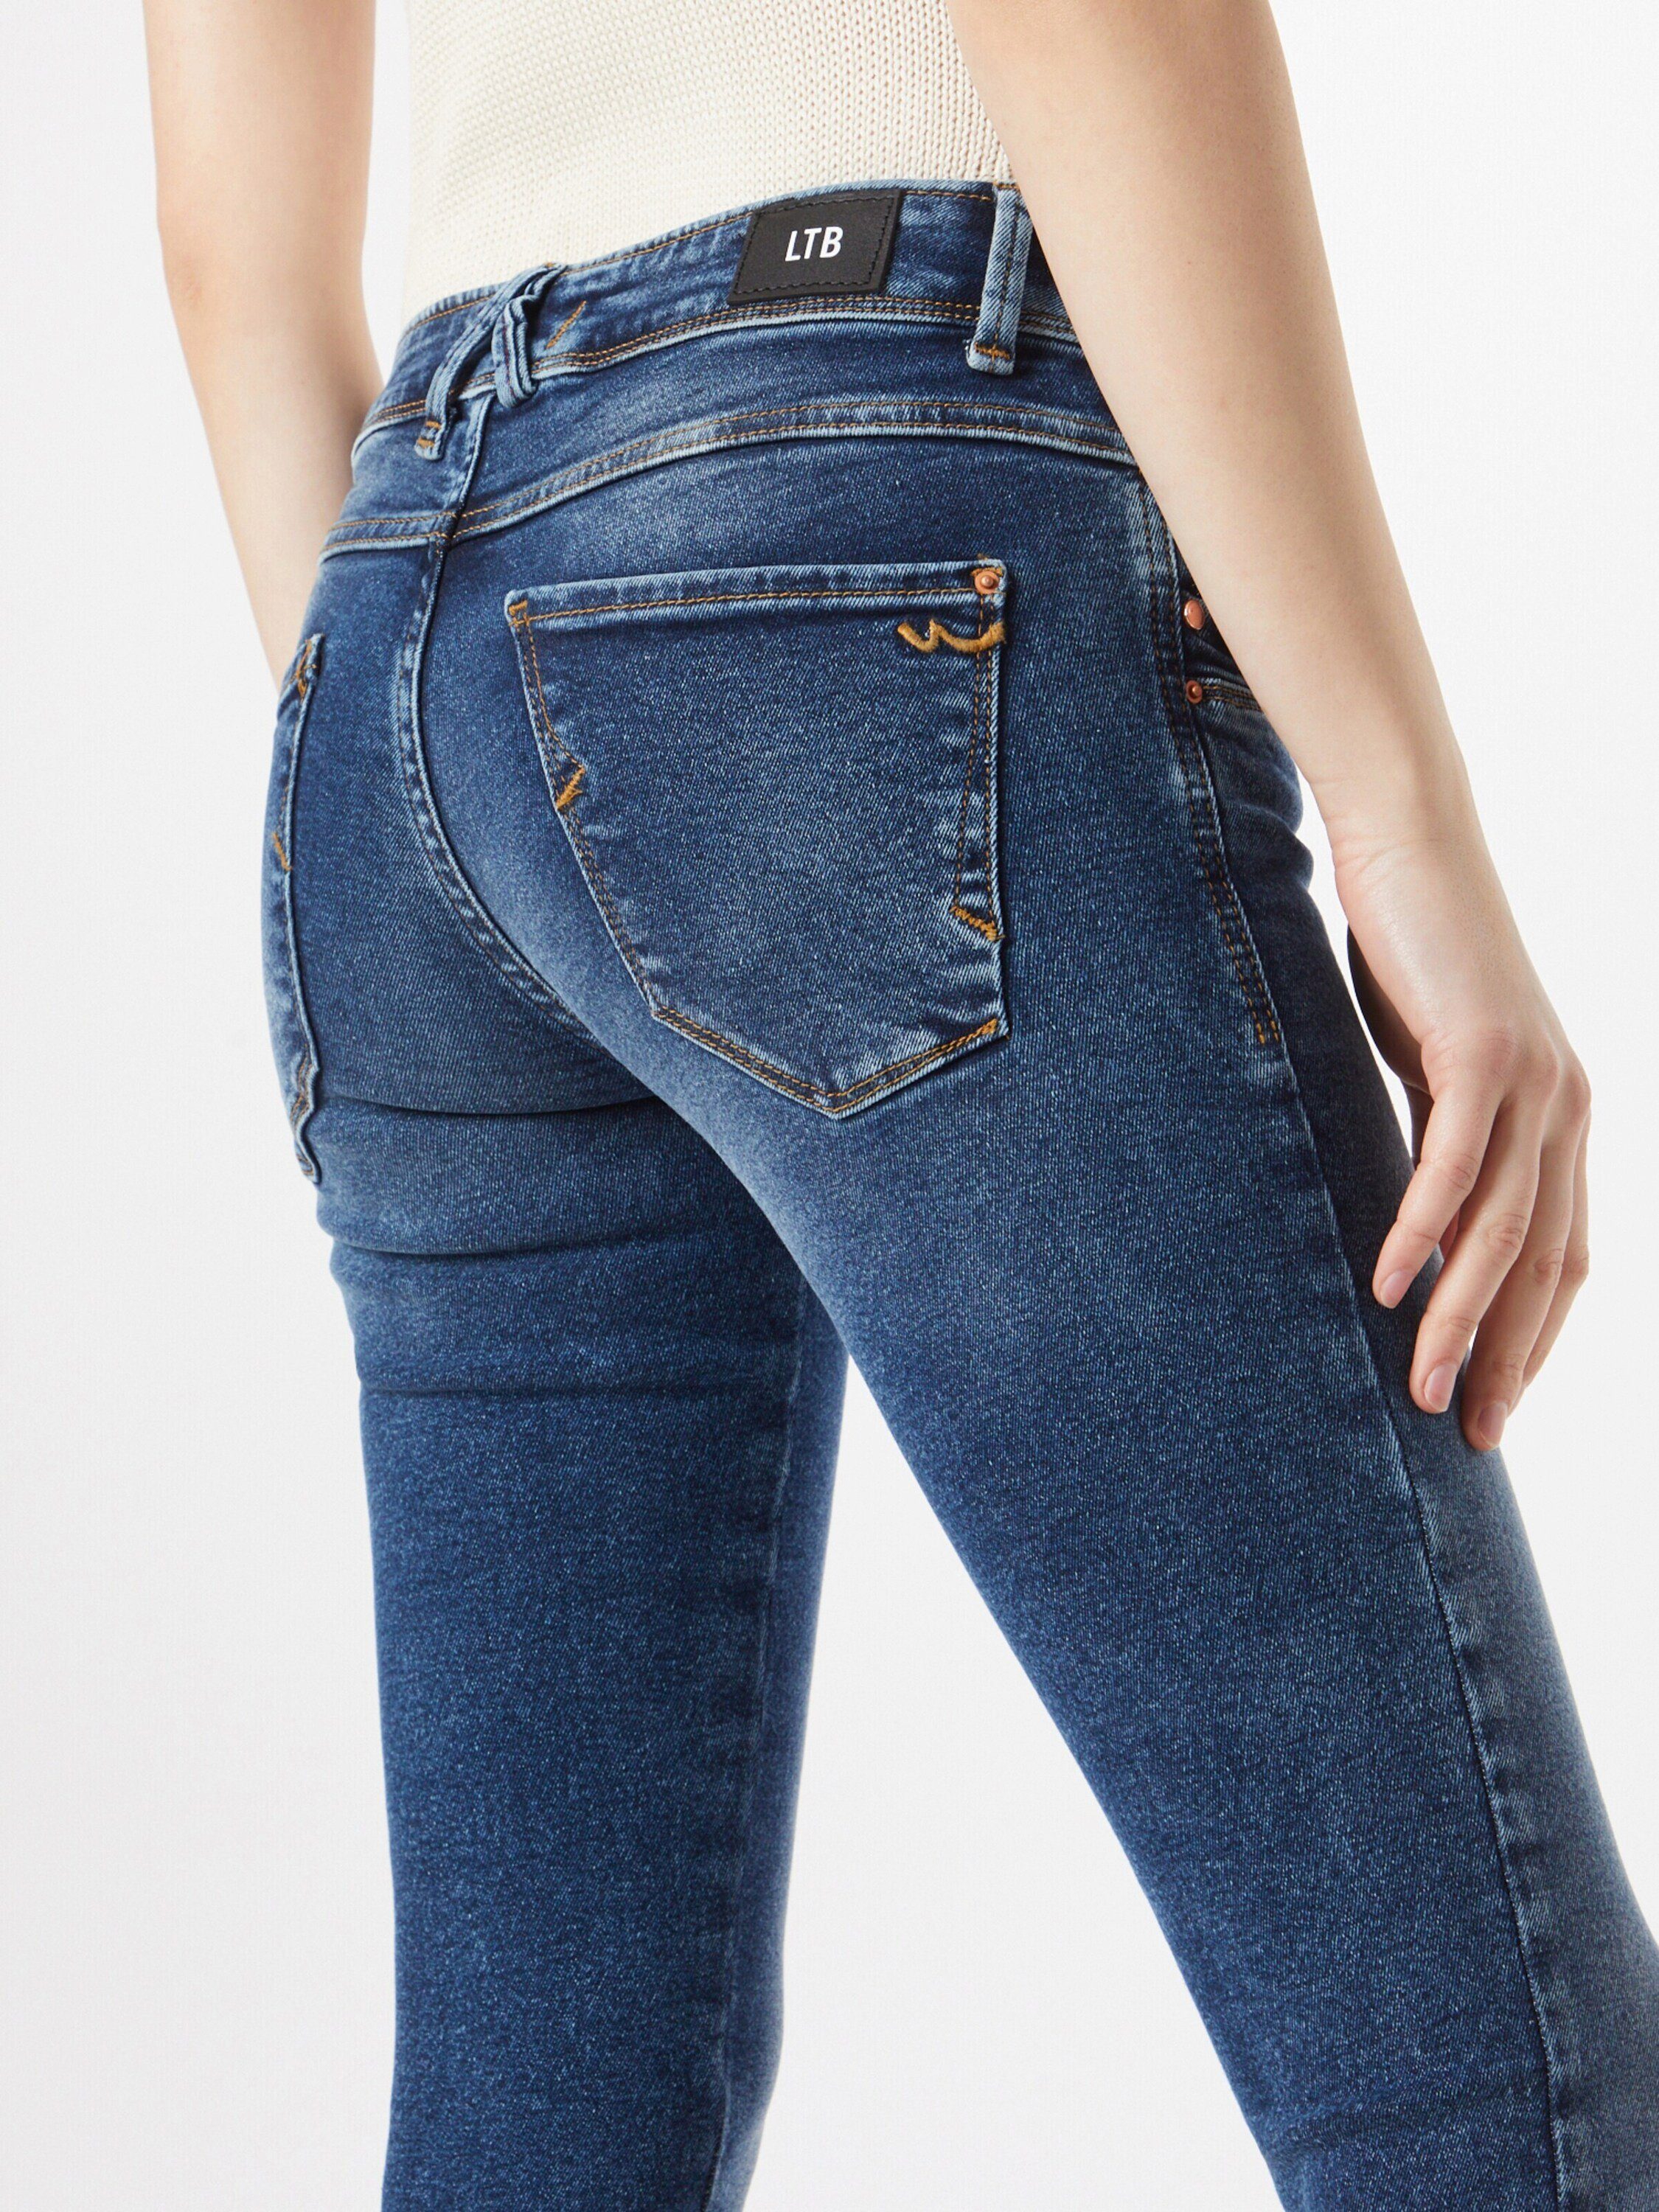 Weiteres LTB 7/8-Jeans Detail, Senta Plain/ohne (1-tlg) Details